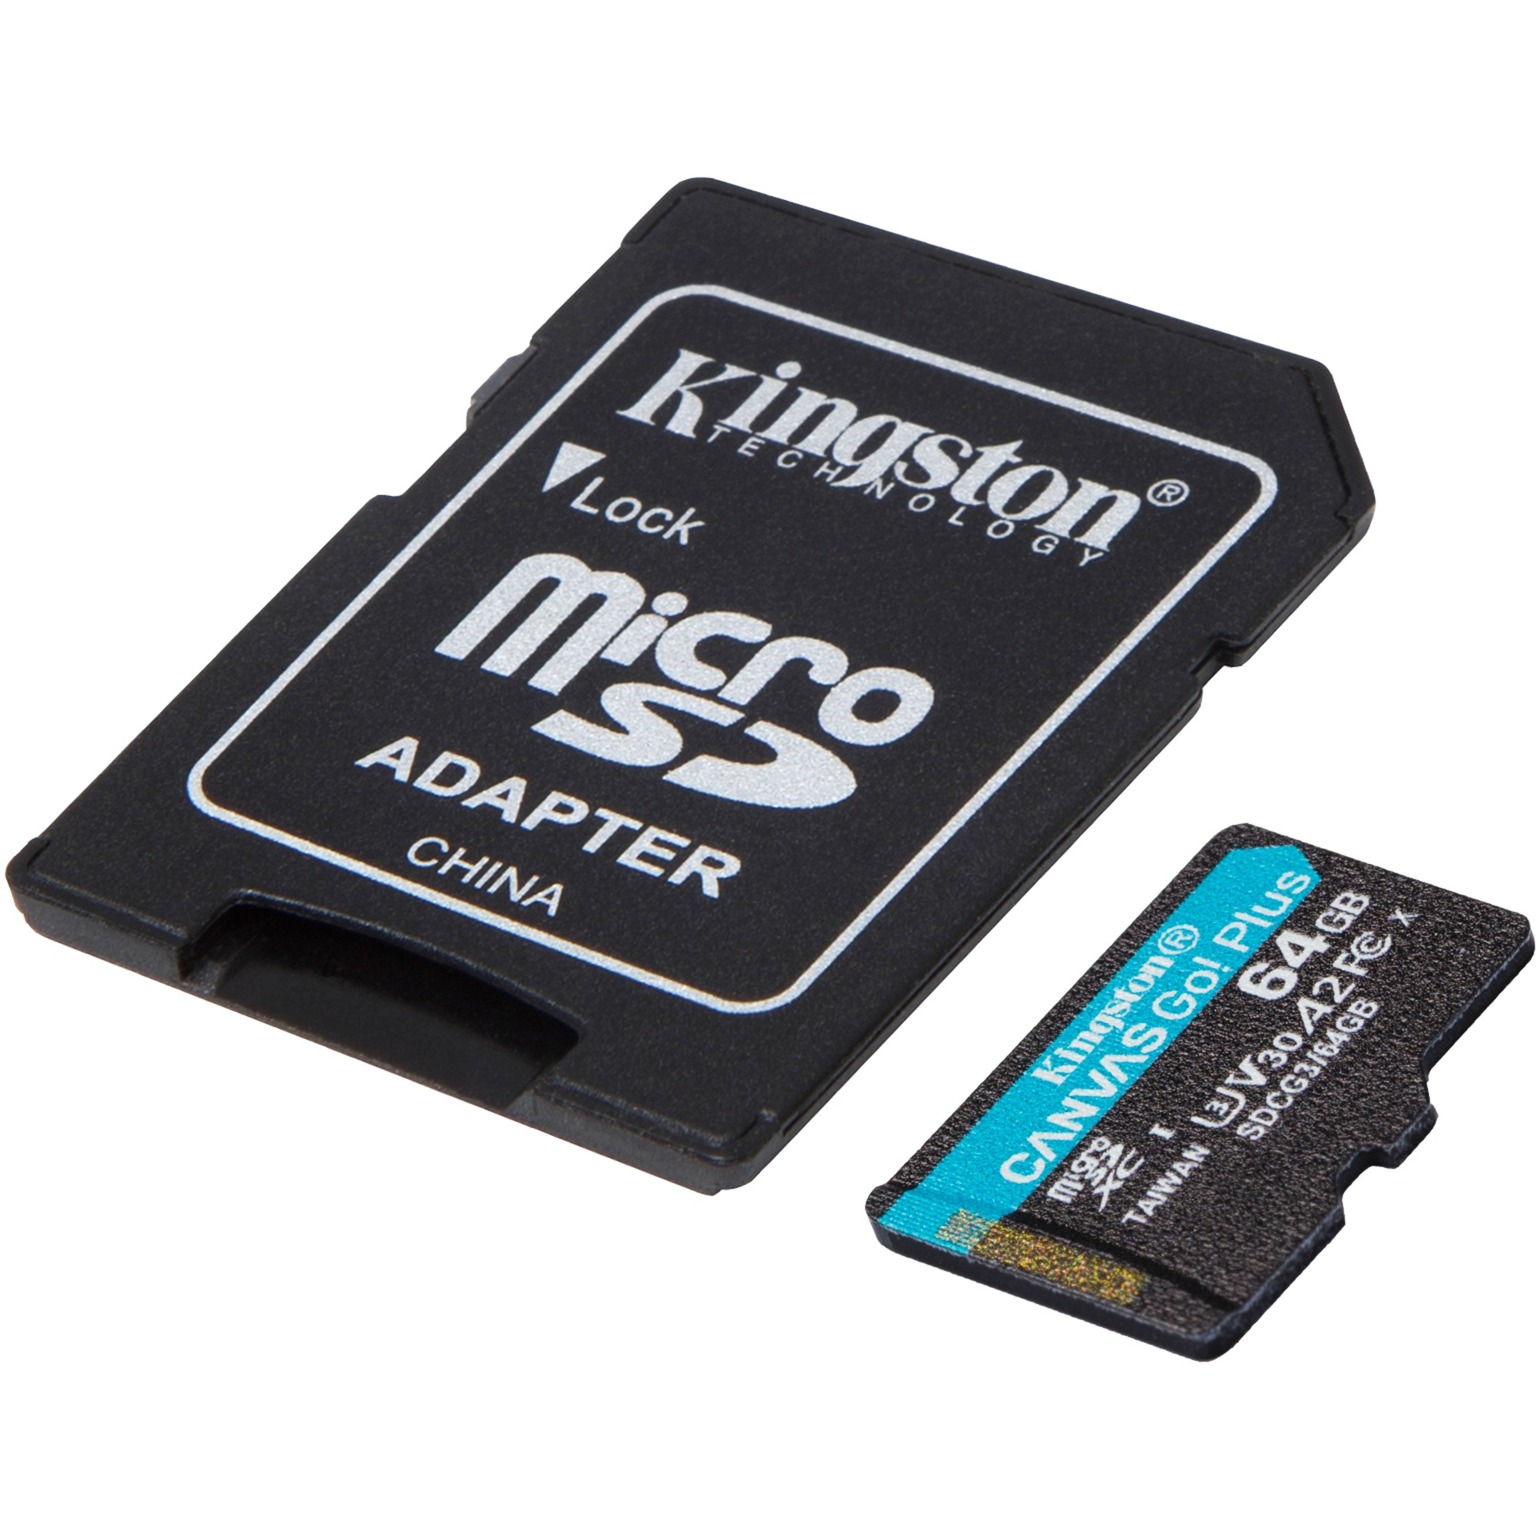 Image of Alternate - Canvas Go! Plus 64 GB microSDXC, Speicherkarte online einkaufen bei Alternate